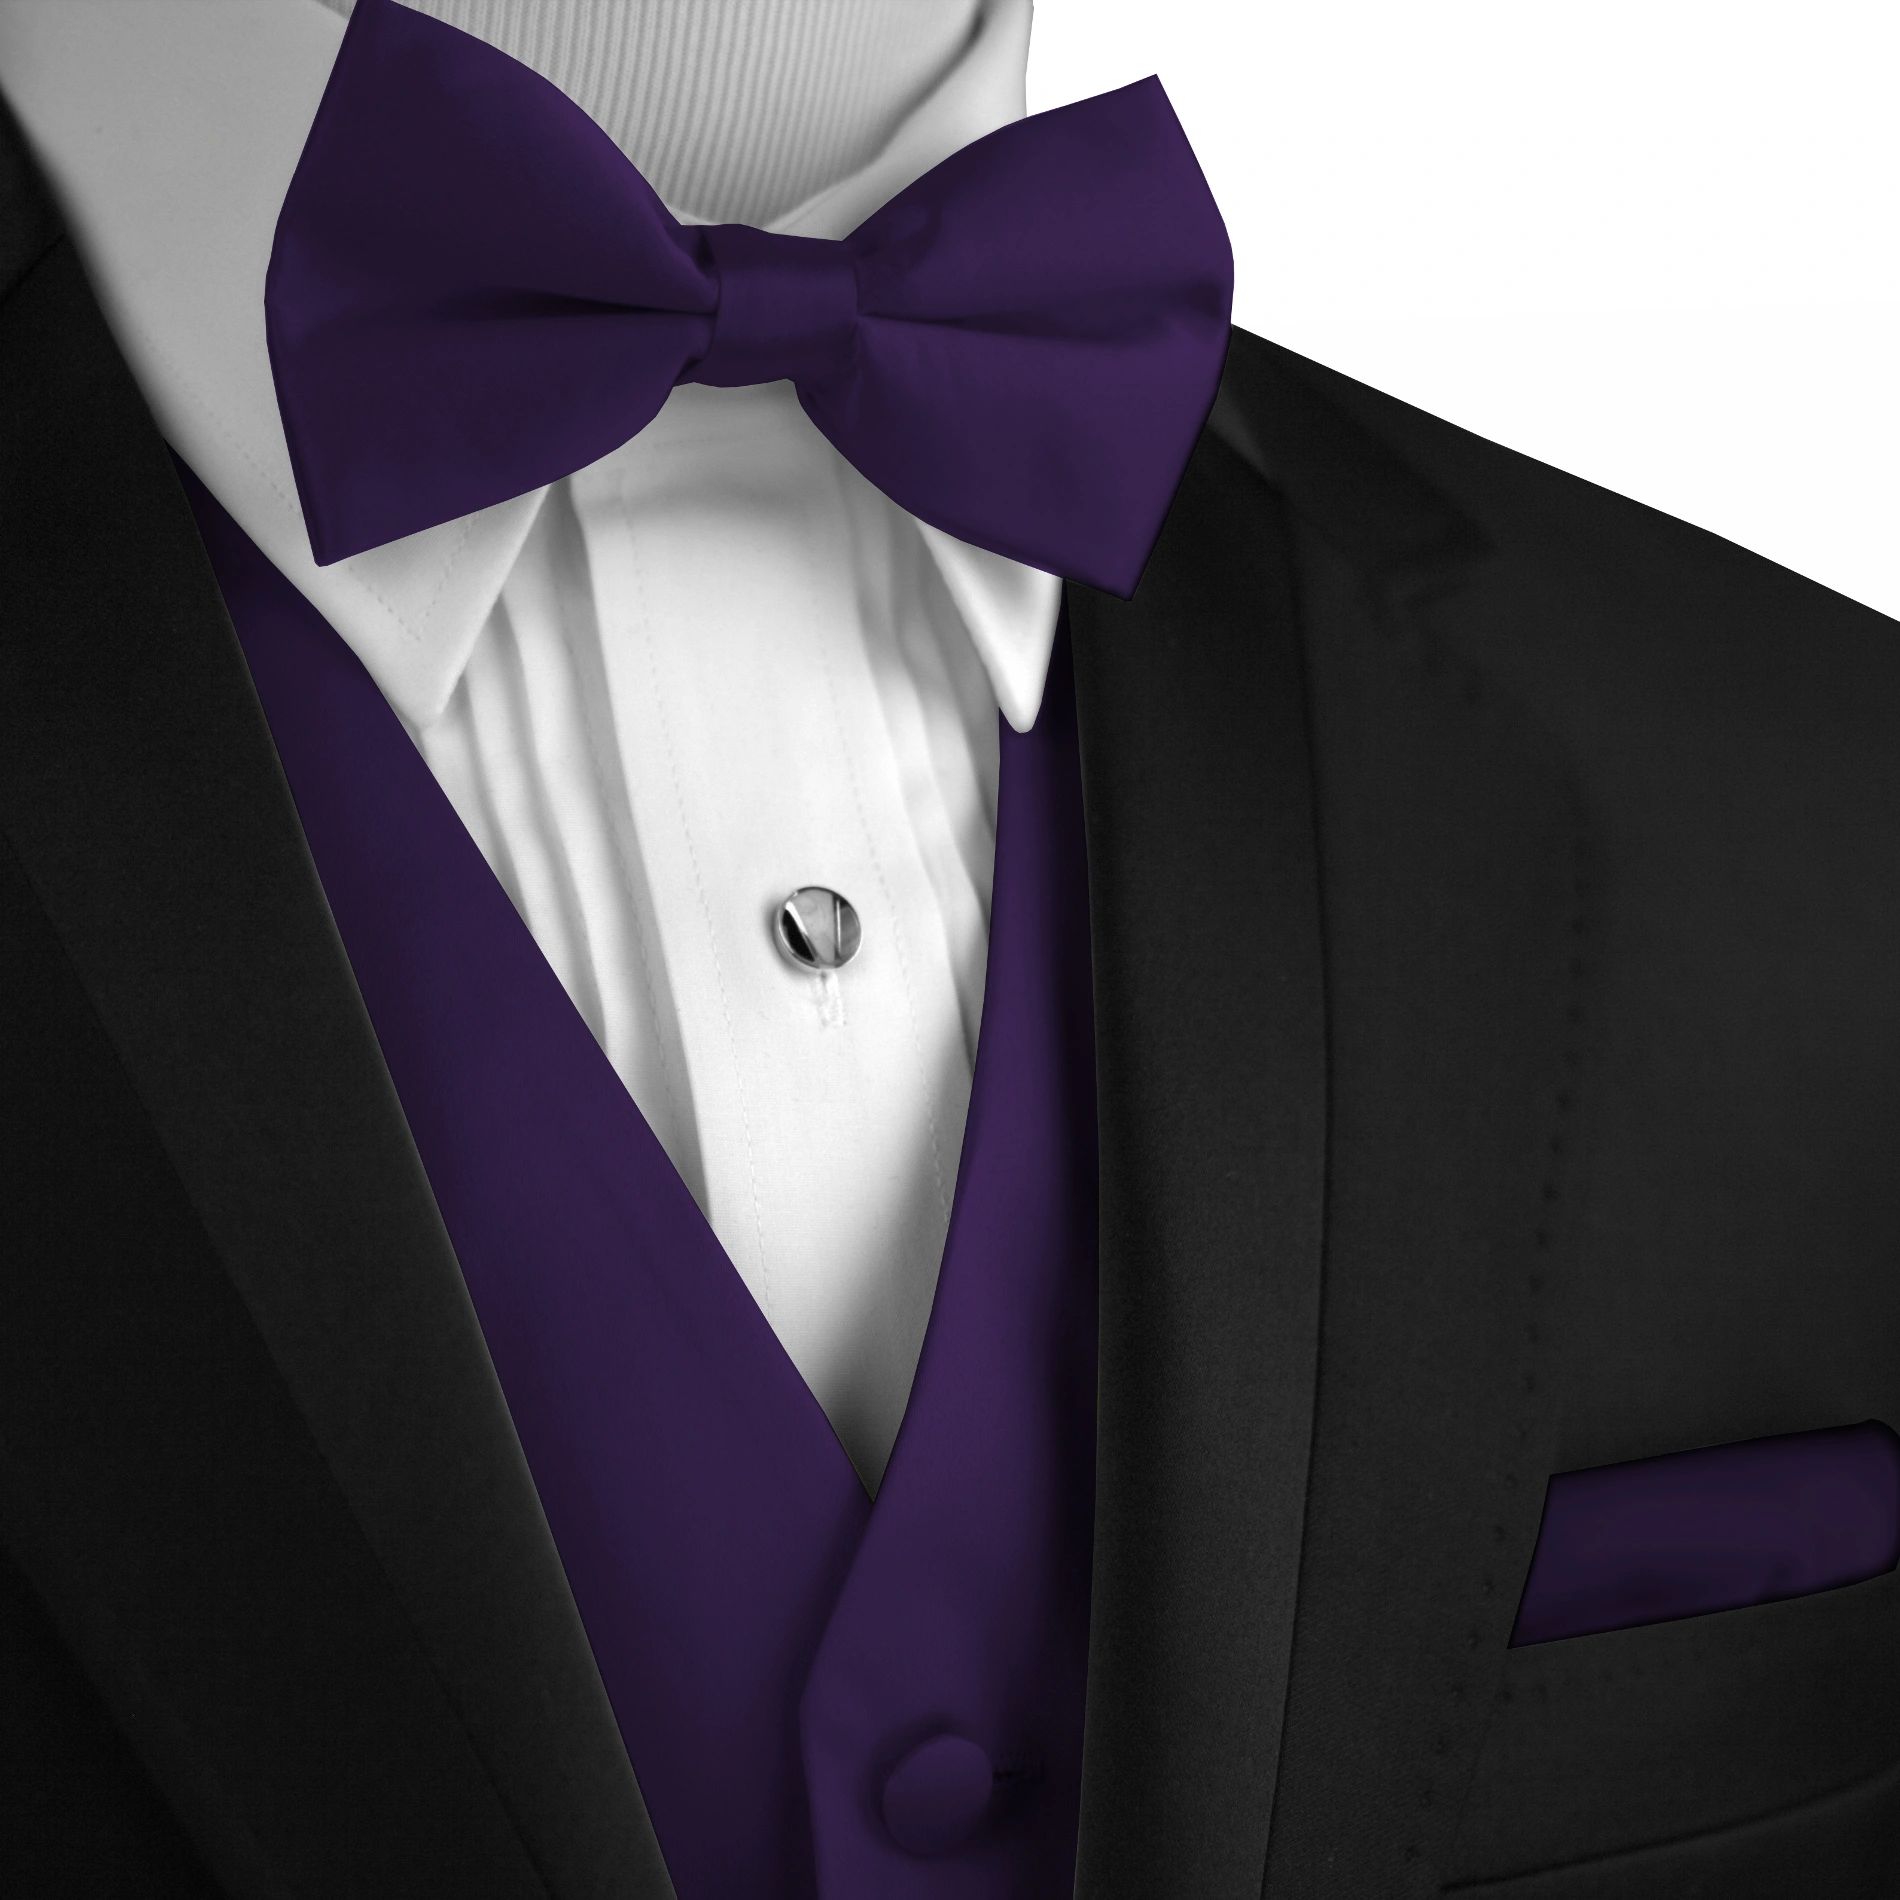 Brand Q Italian Design, Men's Formal Tuxedo Vest, Bow-Tie & Hankie Set in Lapis